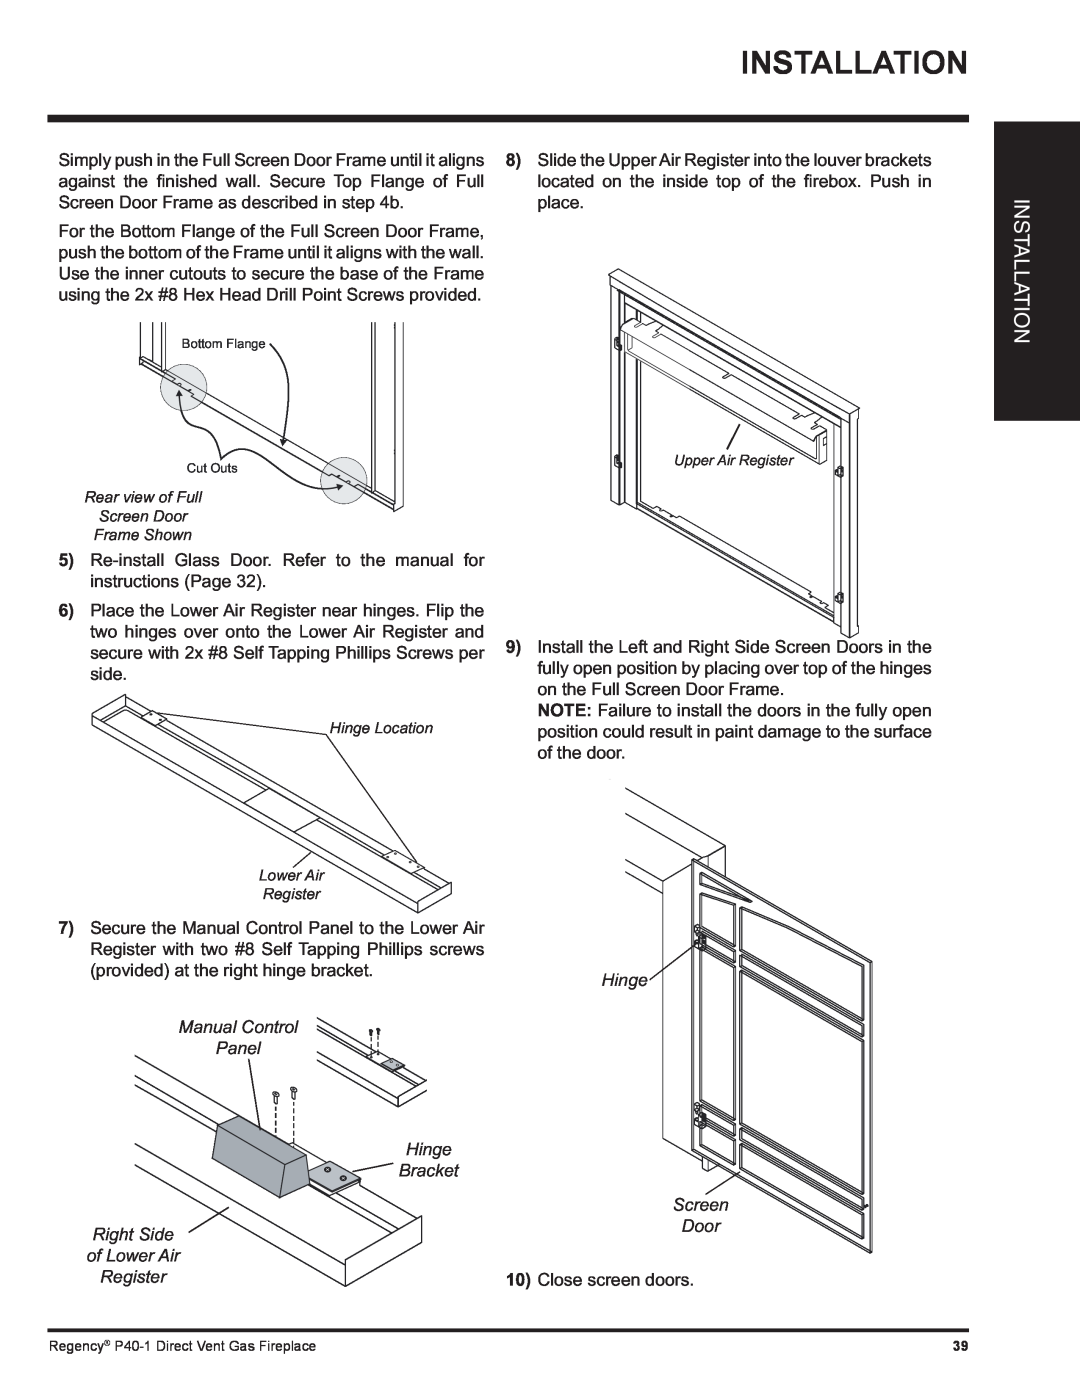 Regency P40-LP1, P40-NG1 Installation, Manual Control Panel, Hinge, Screen, Right Side, Door, of Lower Air, Register 